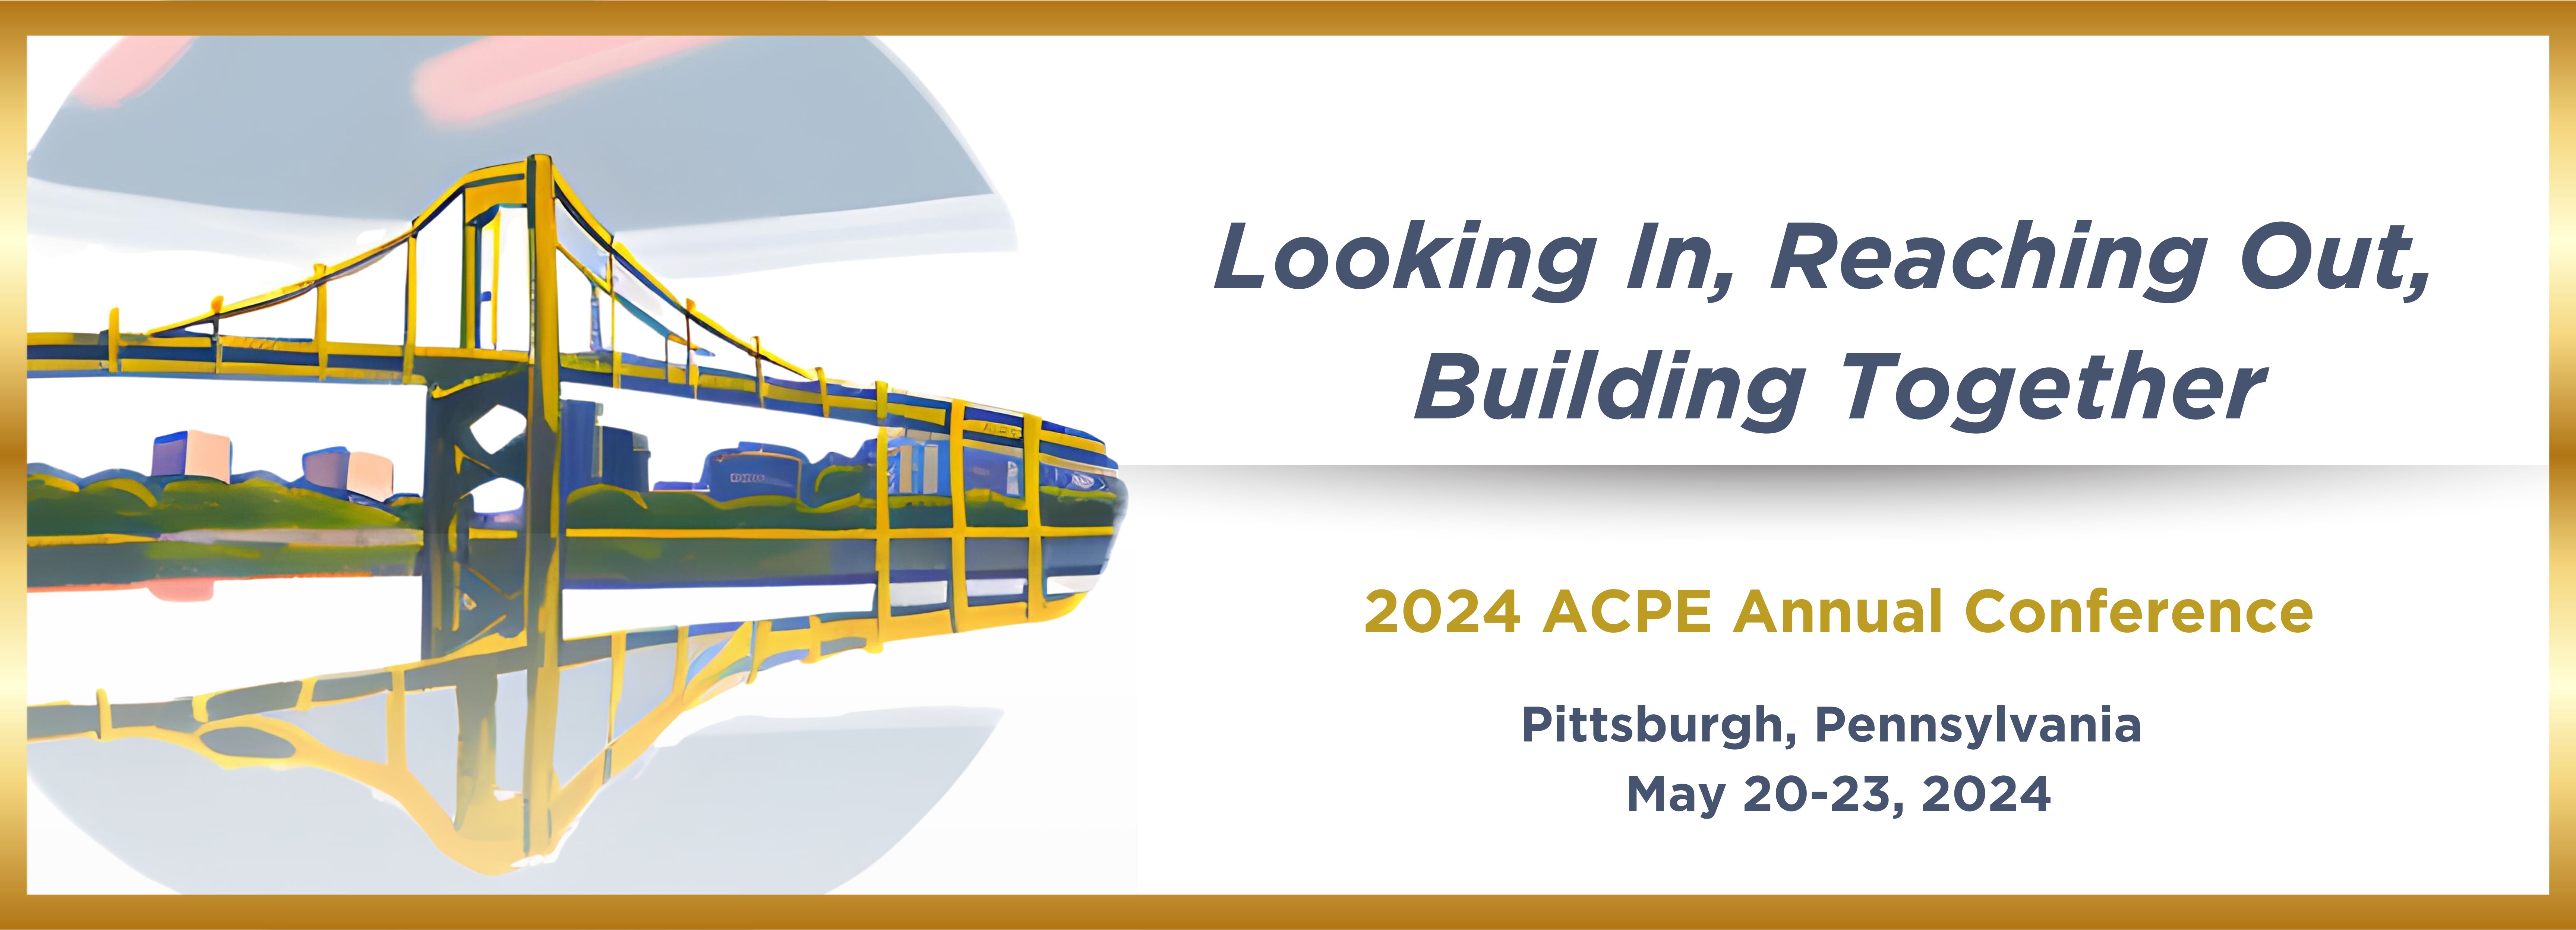 ACPE 2024 Annual Conference